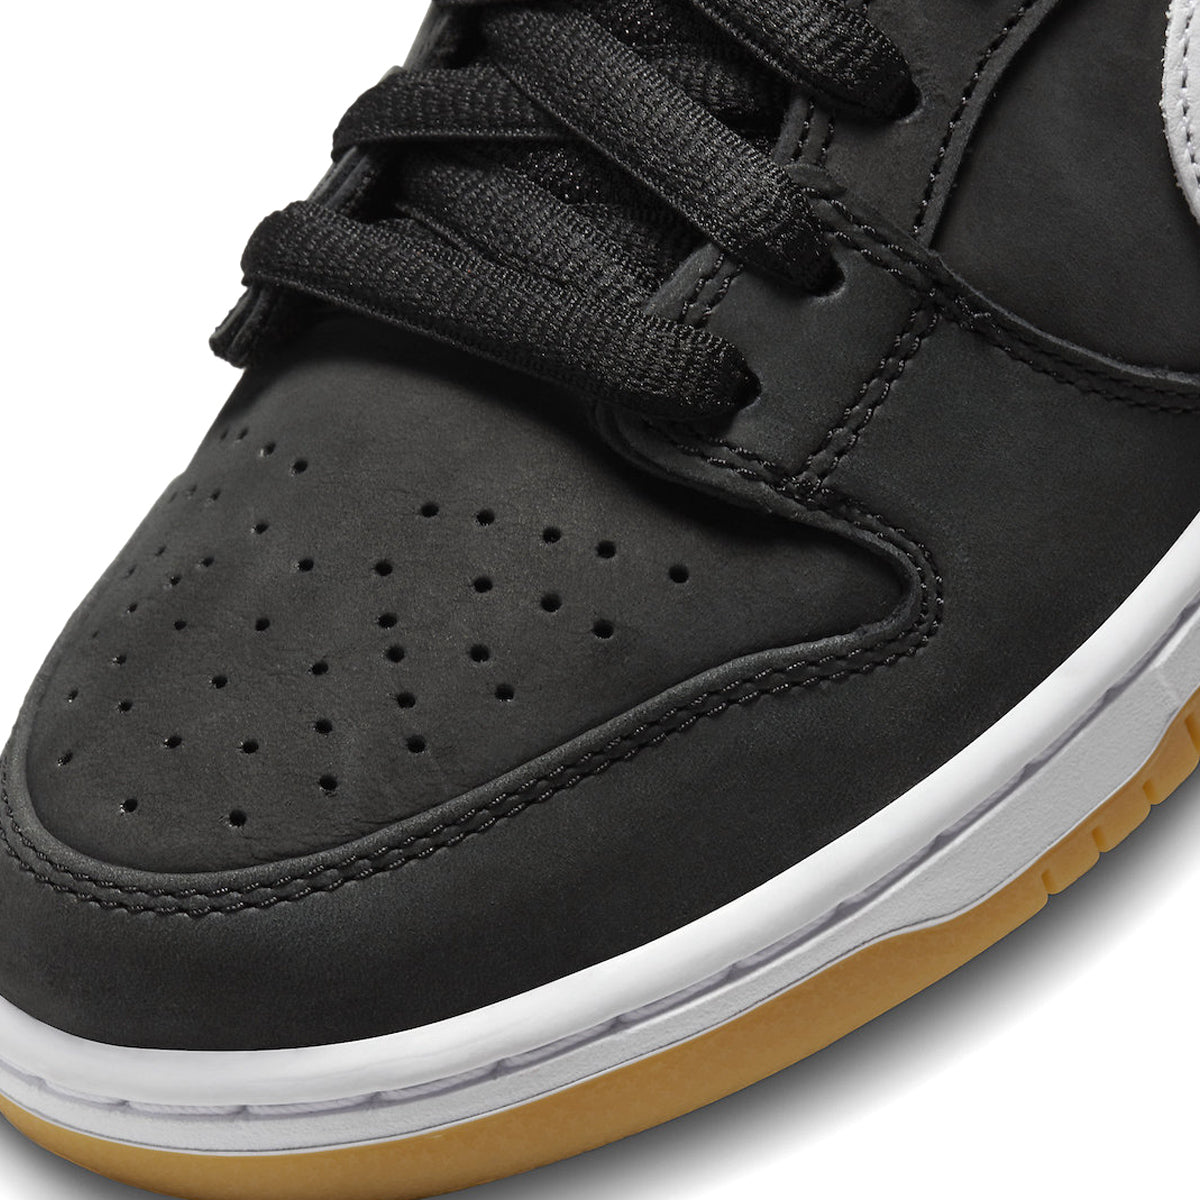 Nike SB Dunk Low Pro Shoes - Black/White/Black/Gum Light Brown image 4